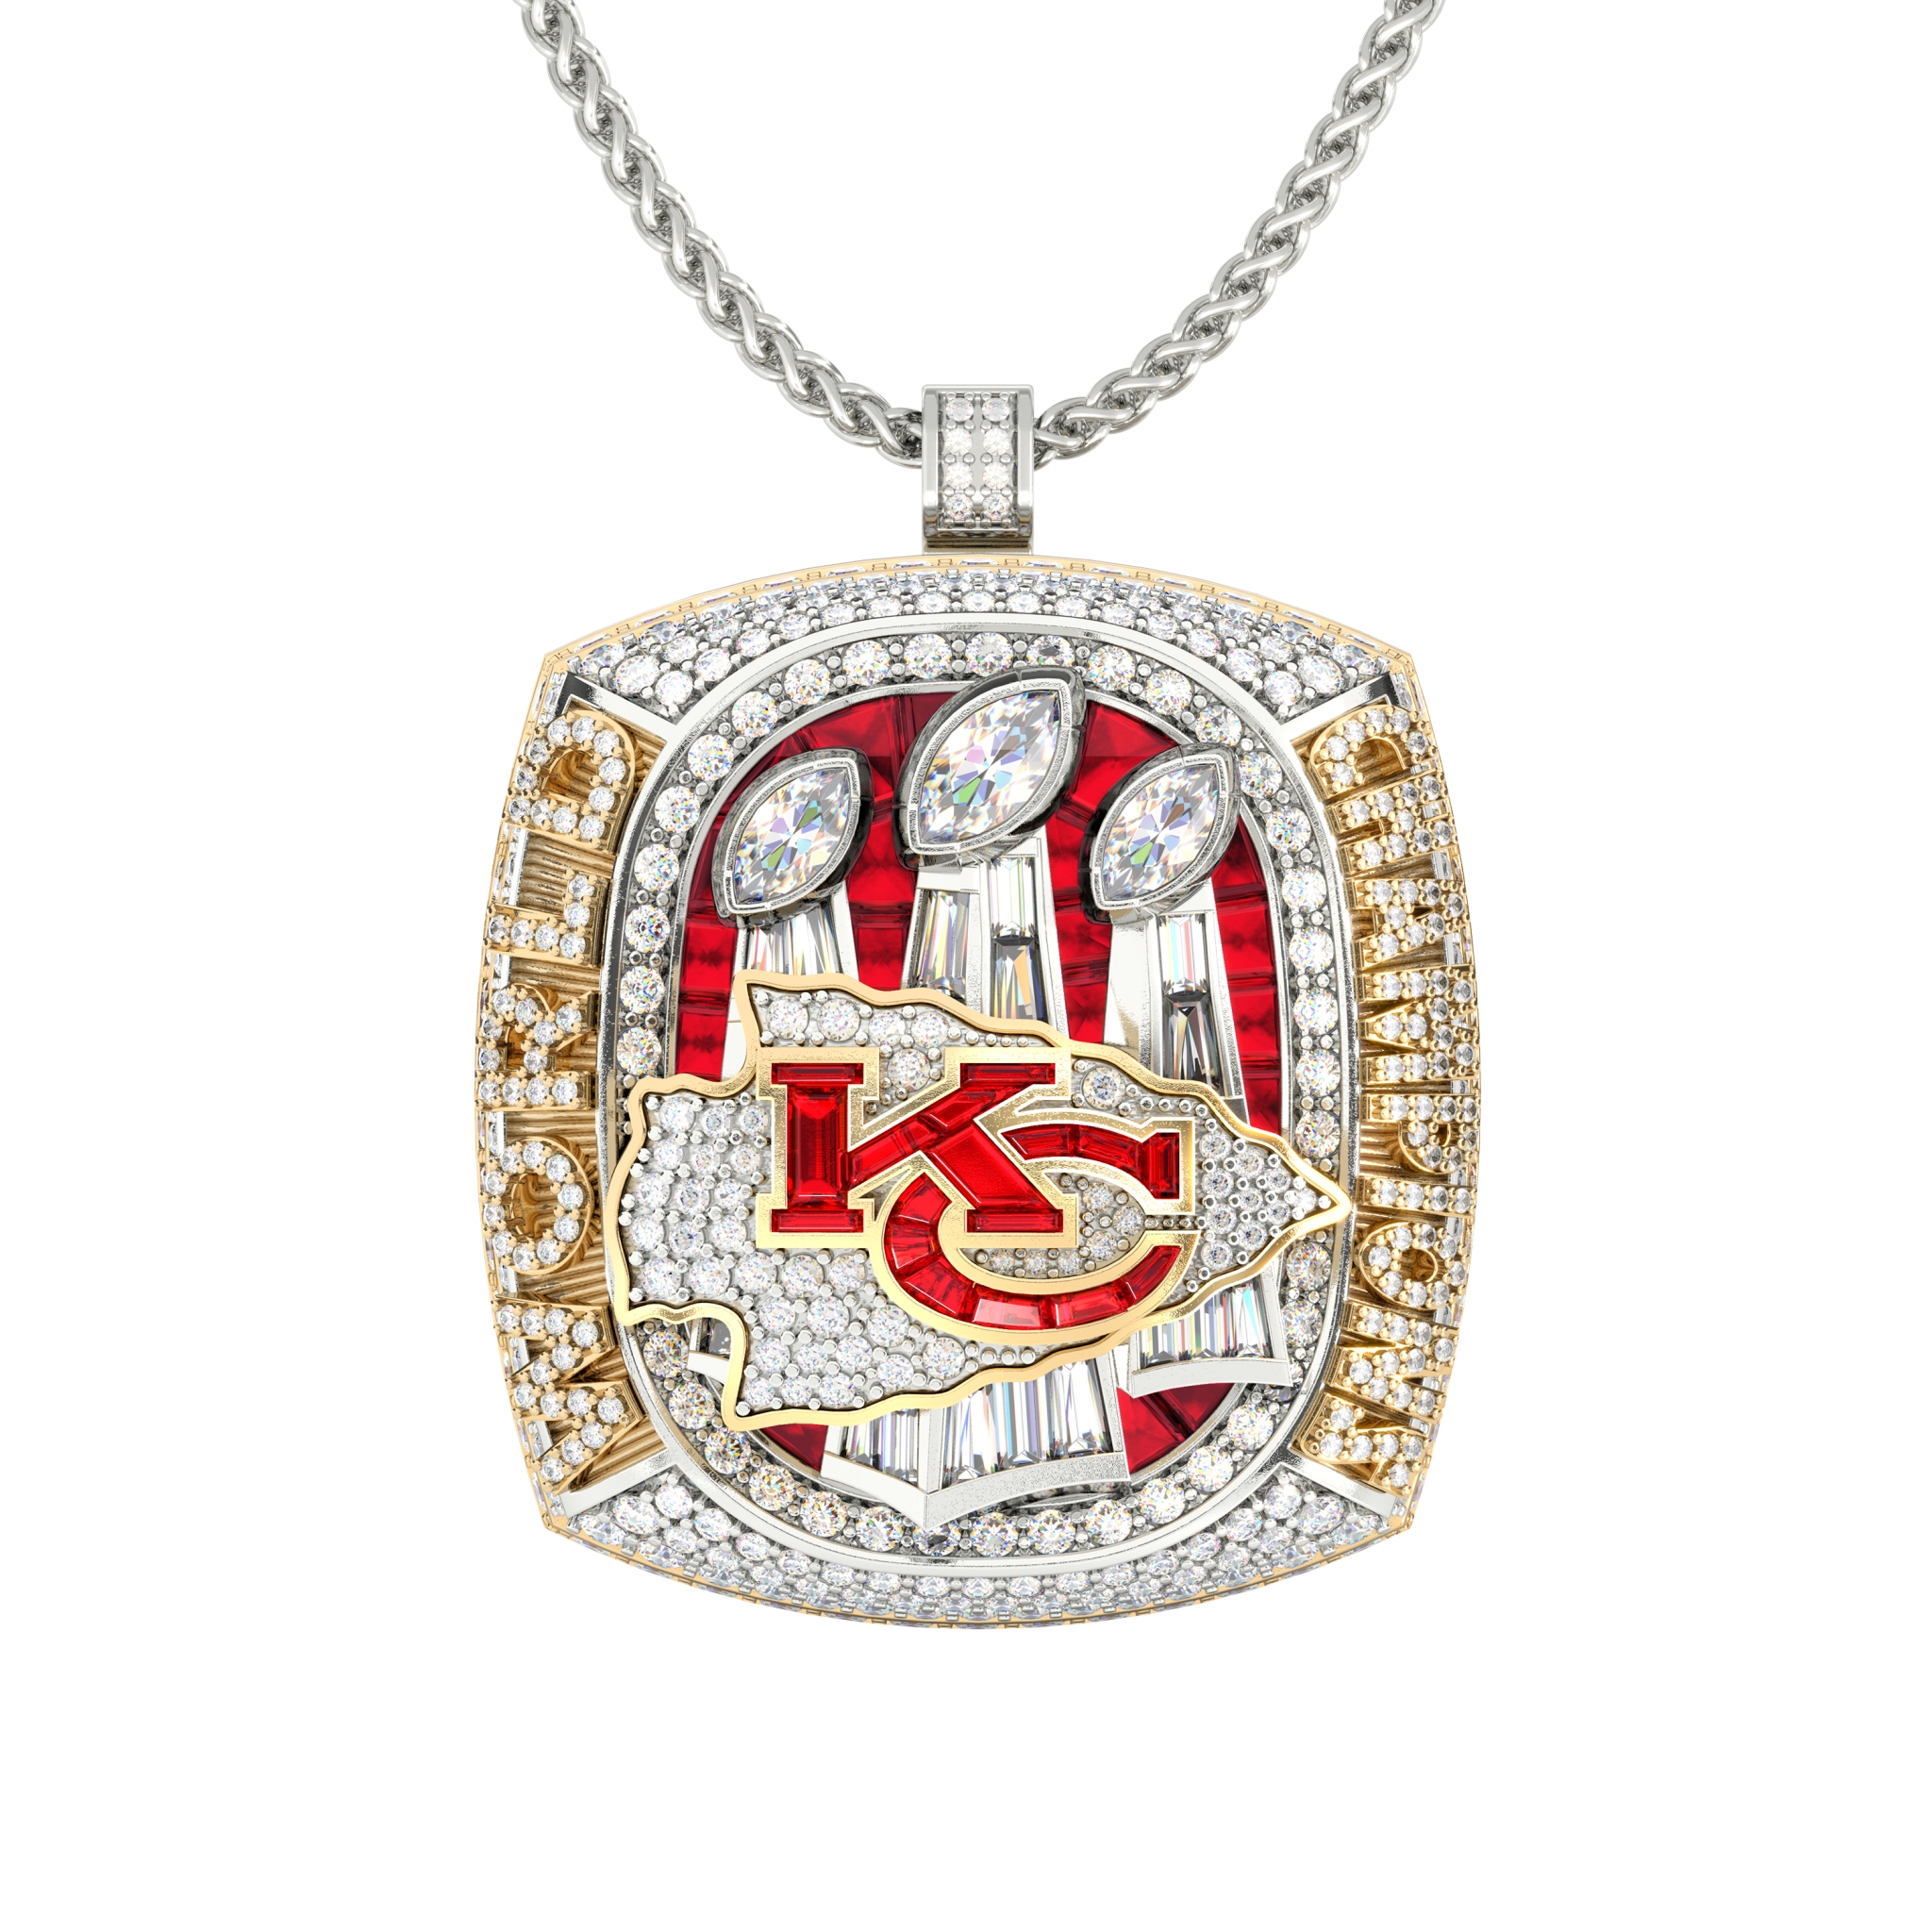 Kansas City Chiefs Super Bowl Lvii Champions Diamond Ring Pn - Inspire  Uplift